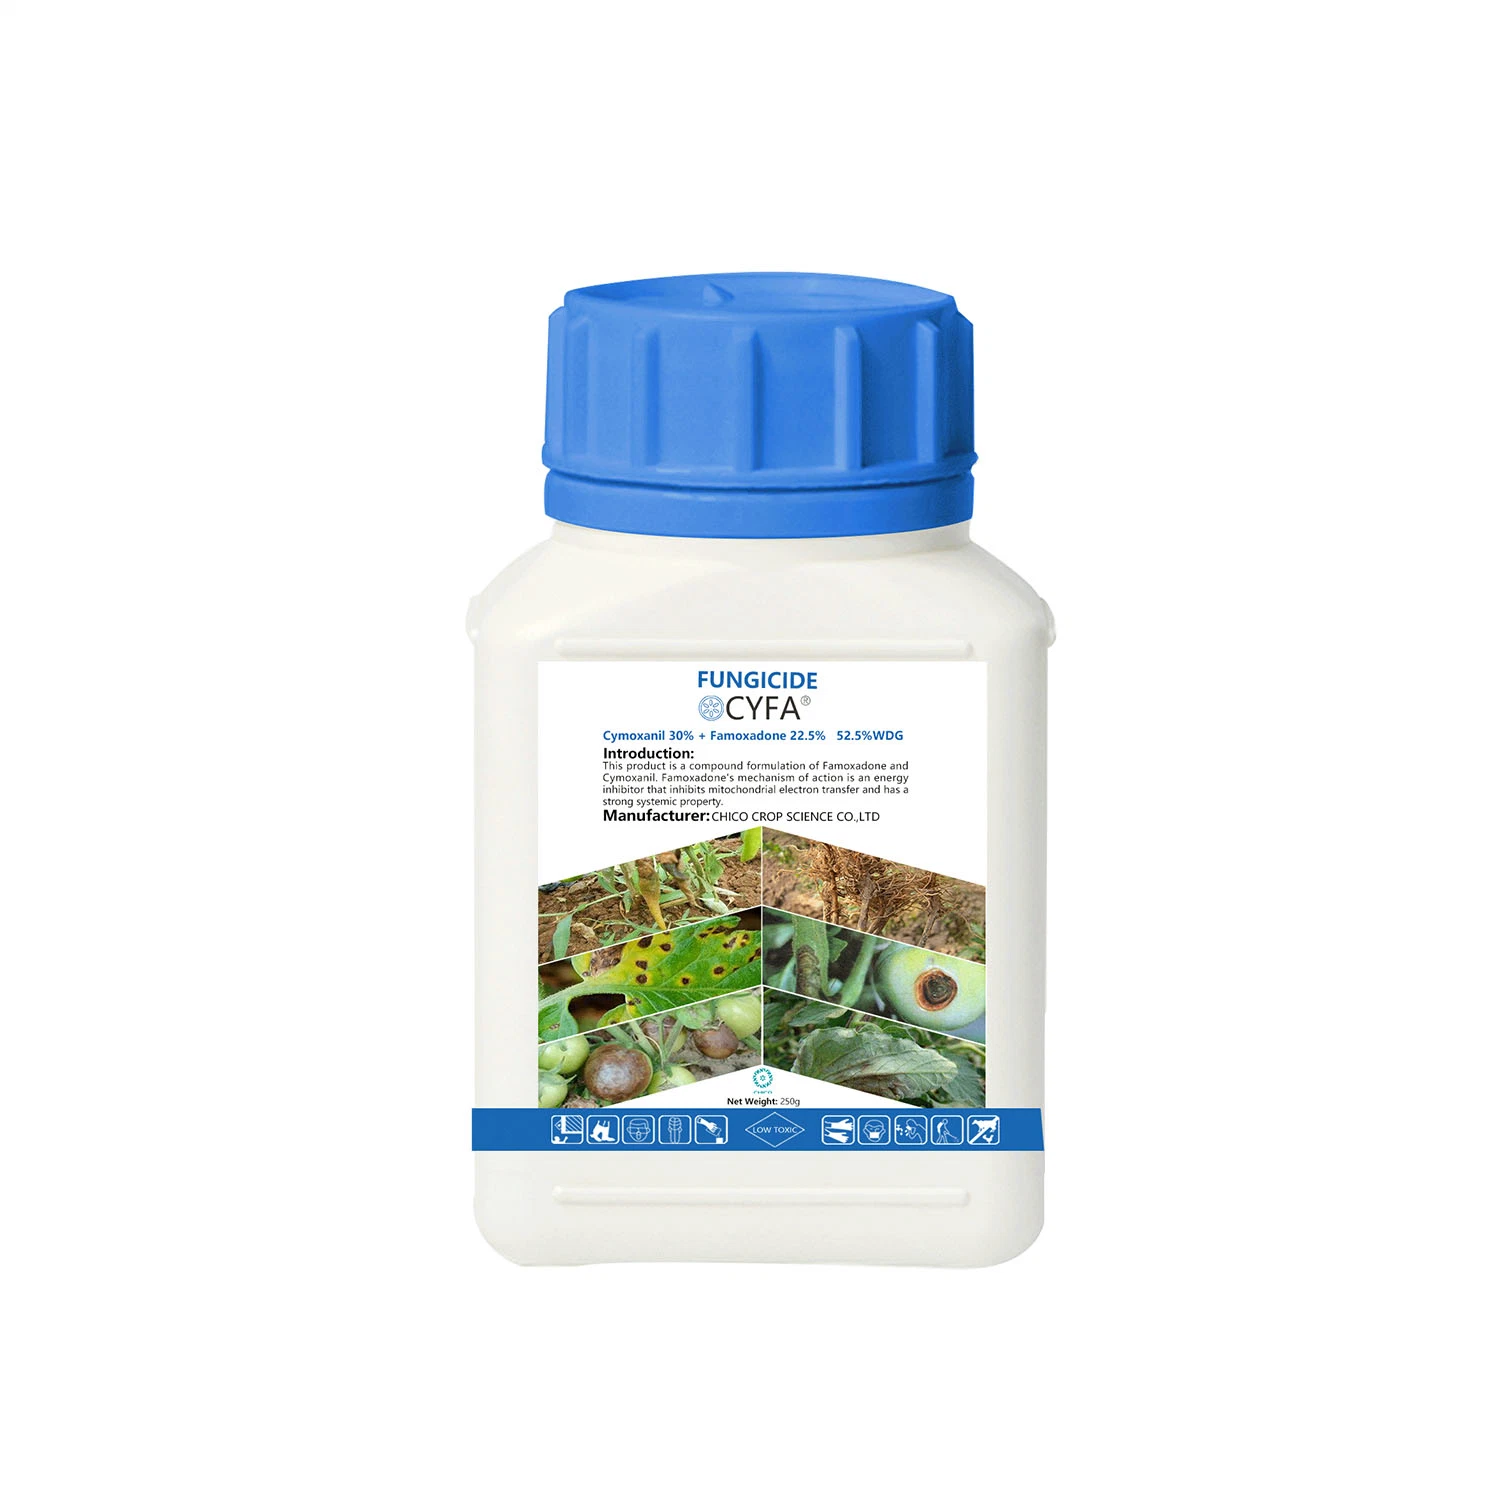 Cymoxanil 30% + Famoxadone 22.5% 52.5% Wdg Protection and Treatment Fungicide